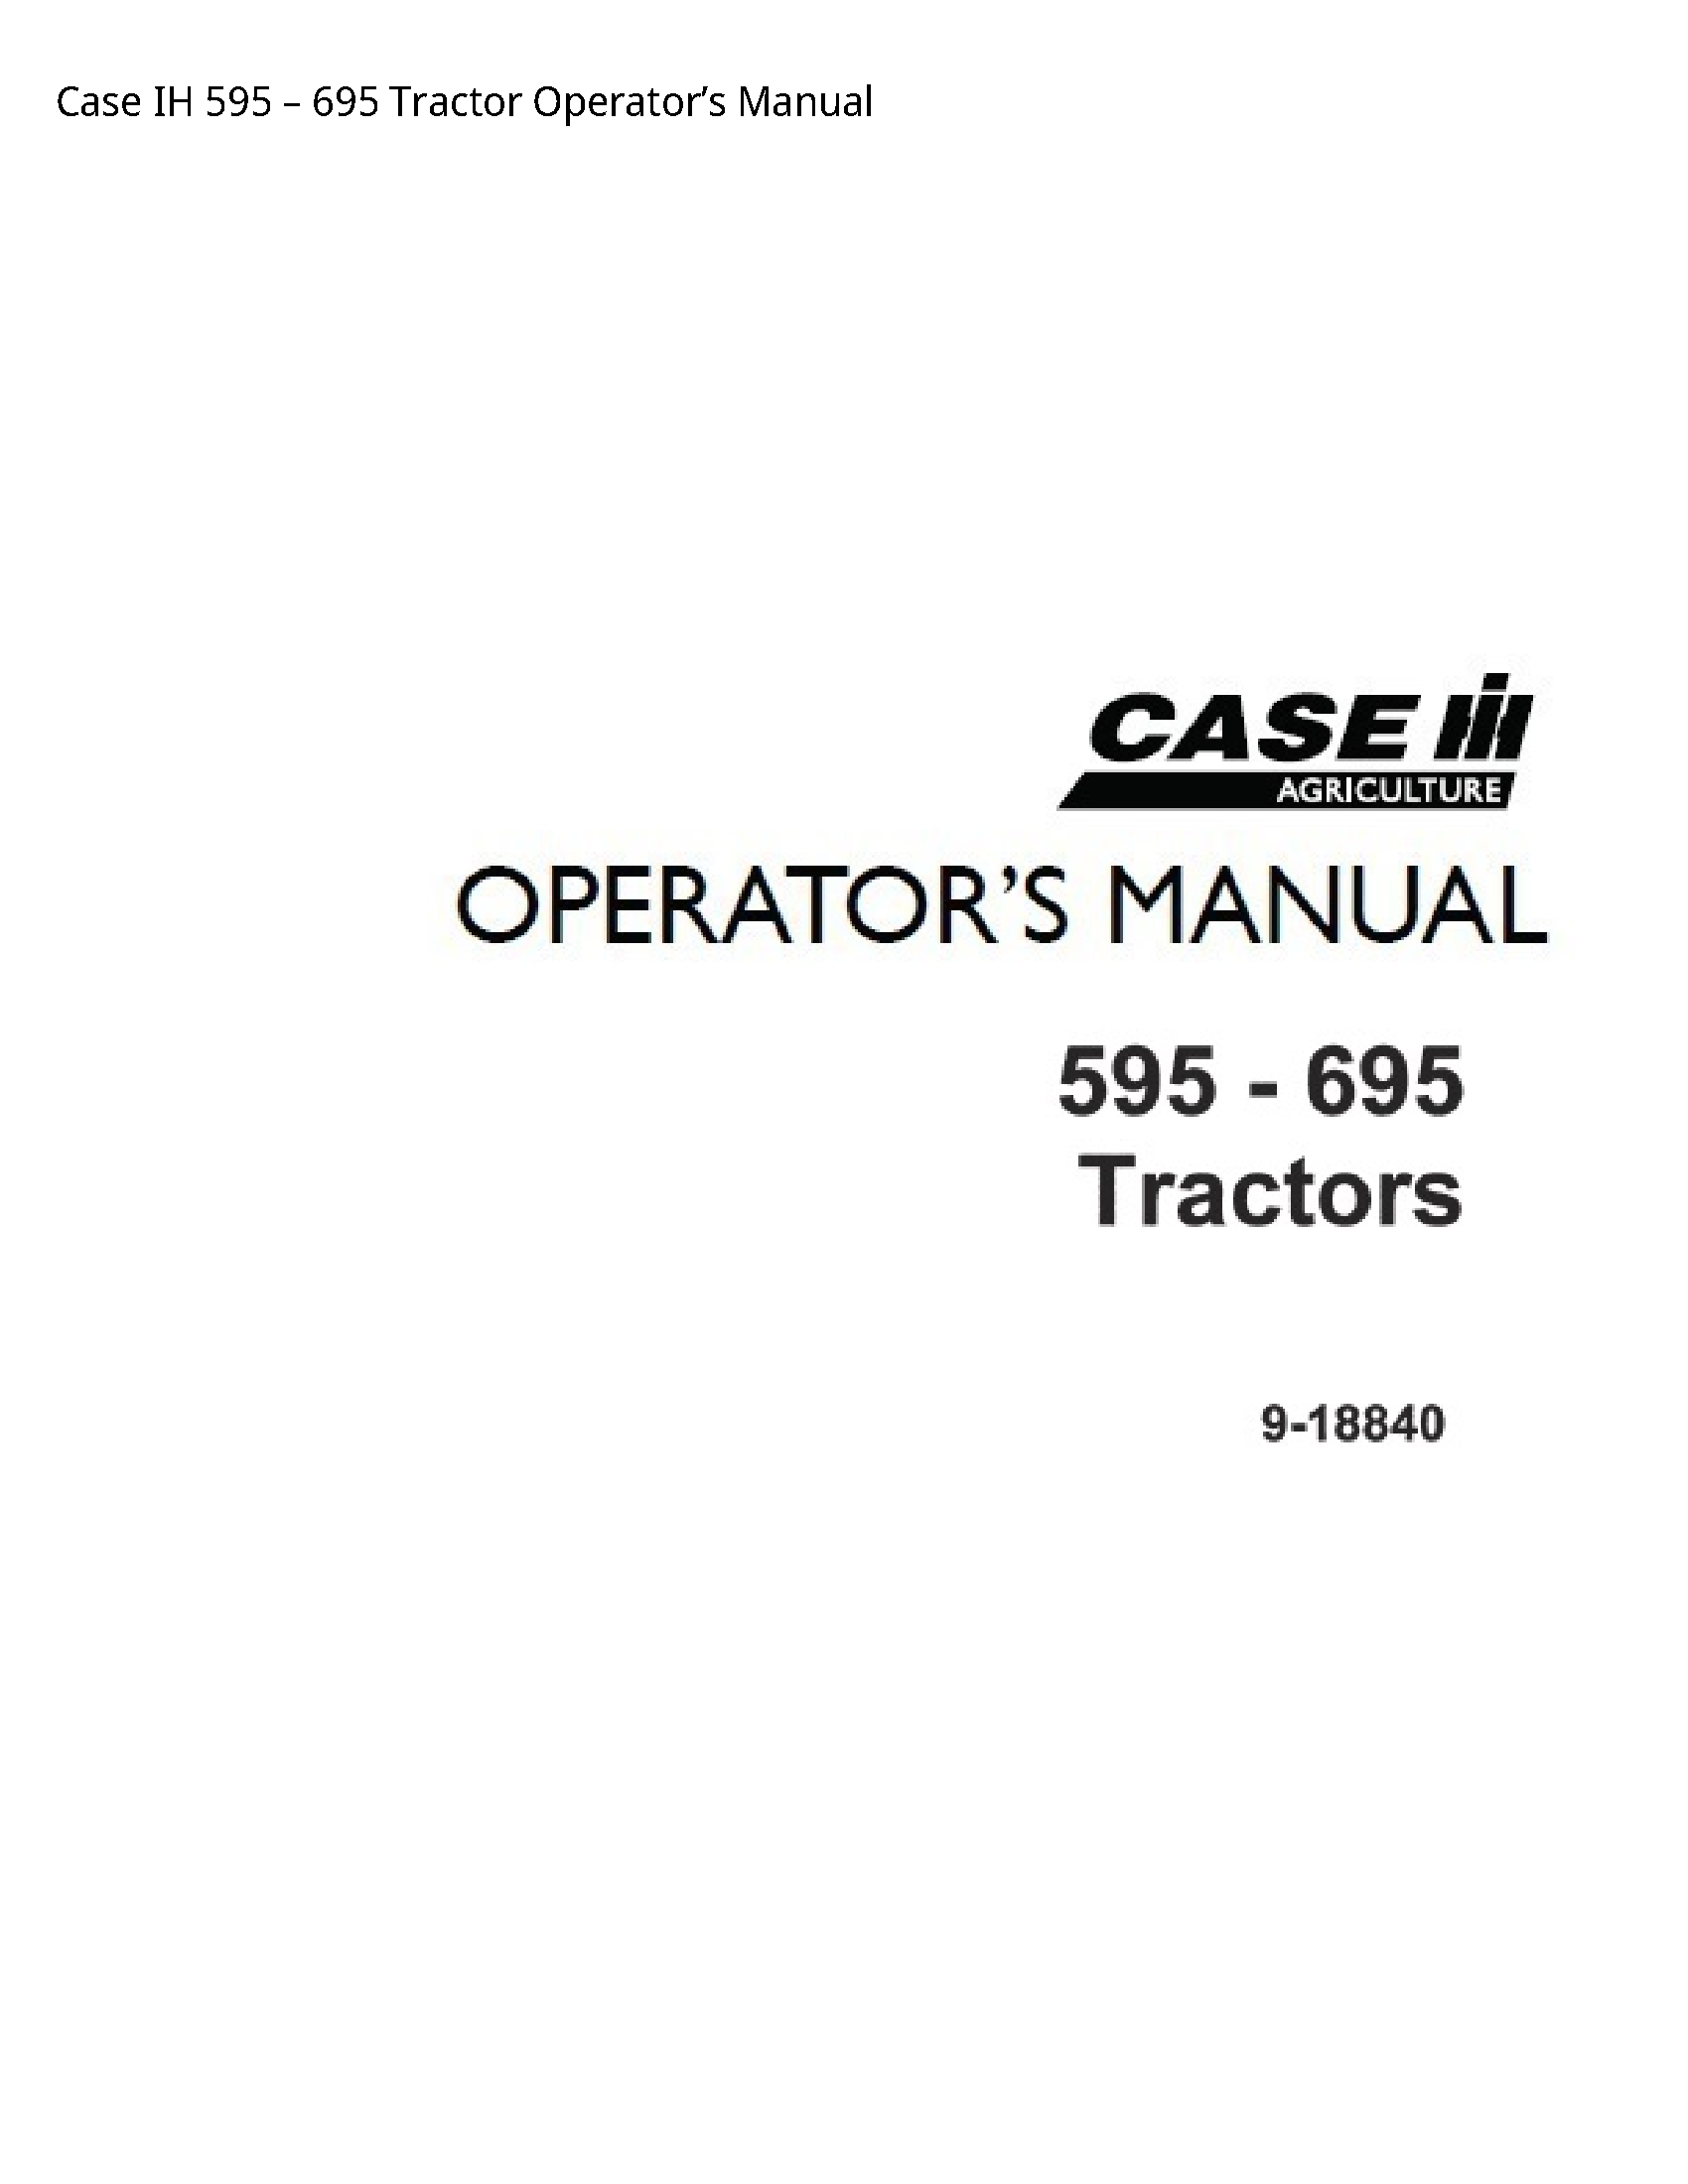 Case/Case IH 595 IH Tractor Operator’s manual